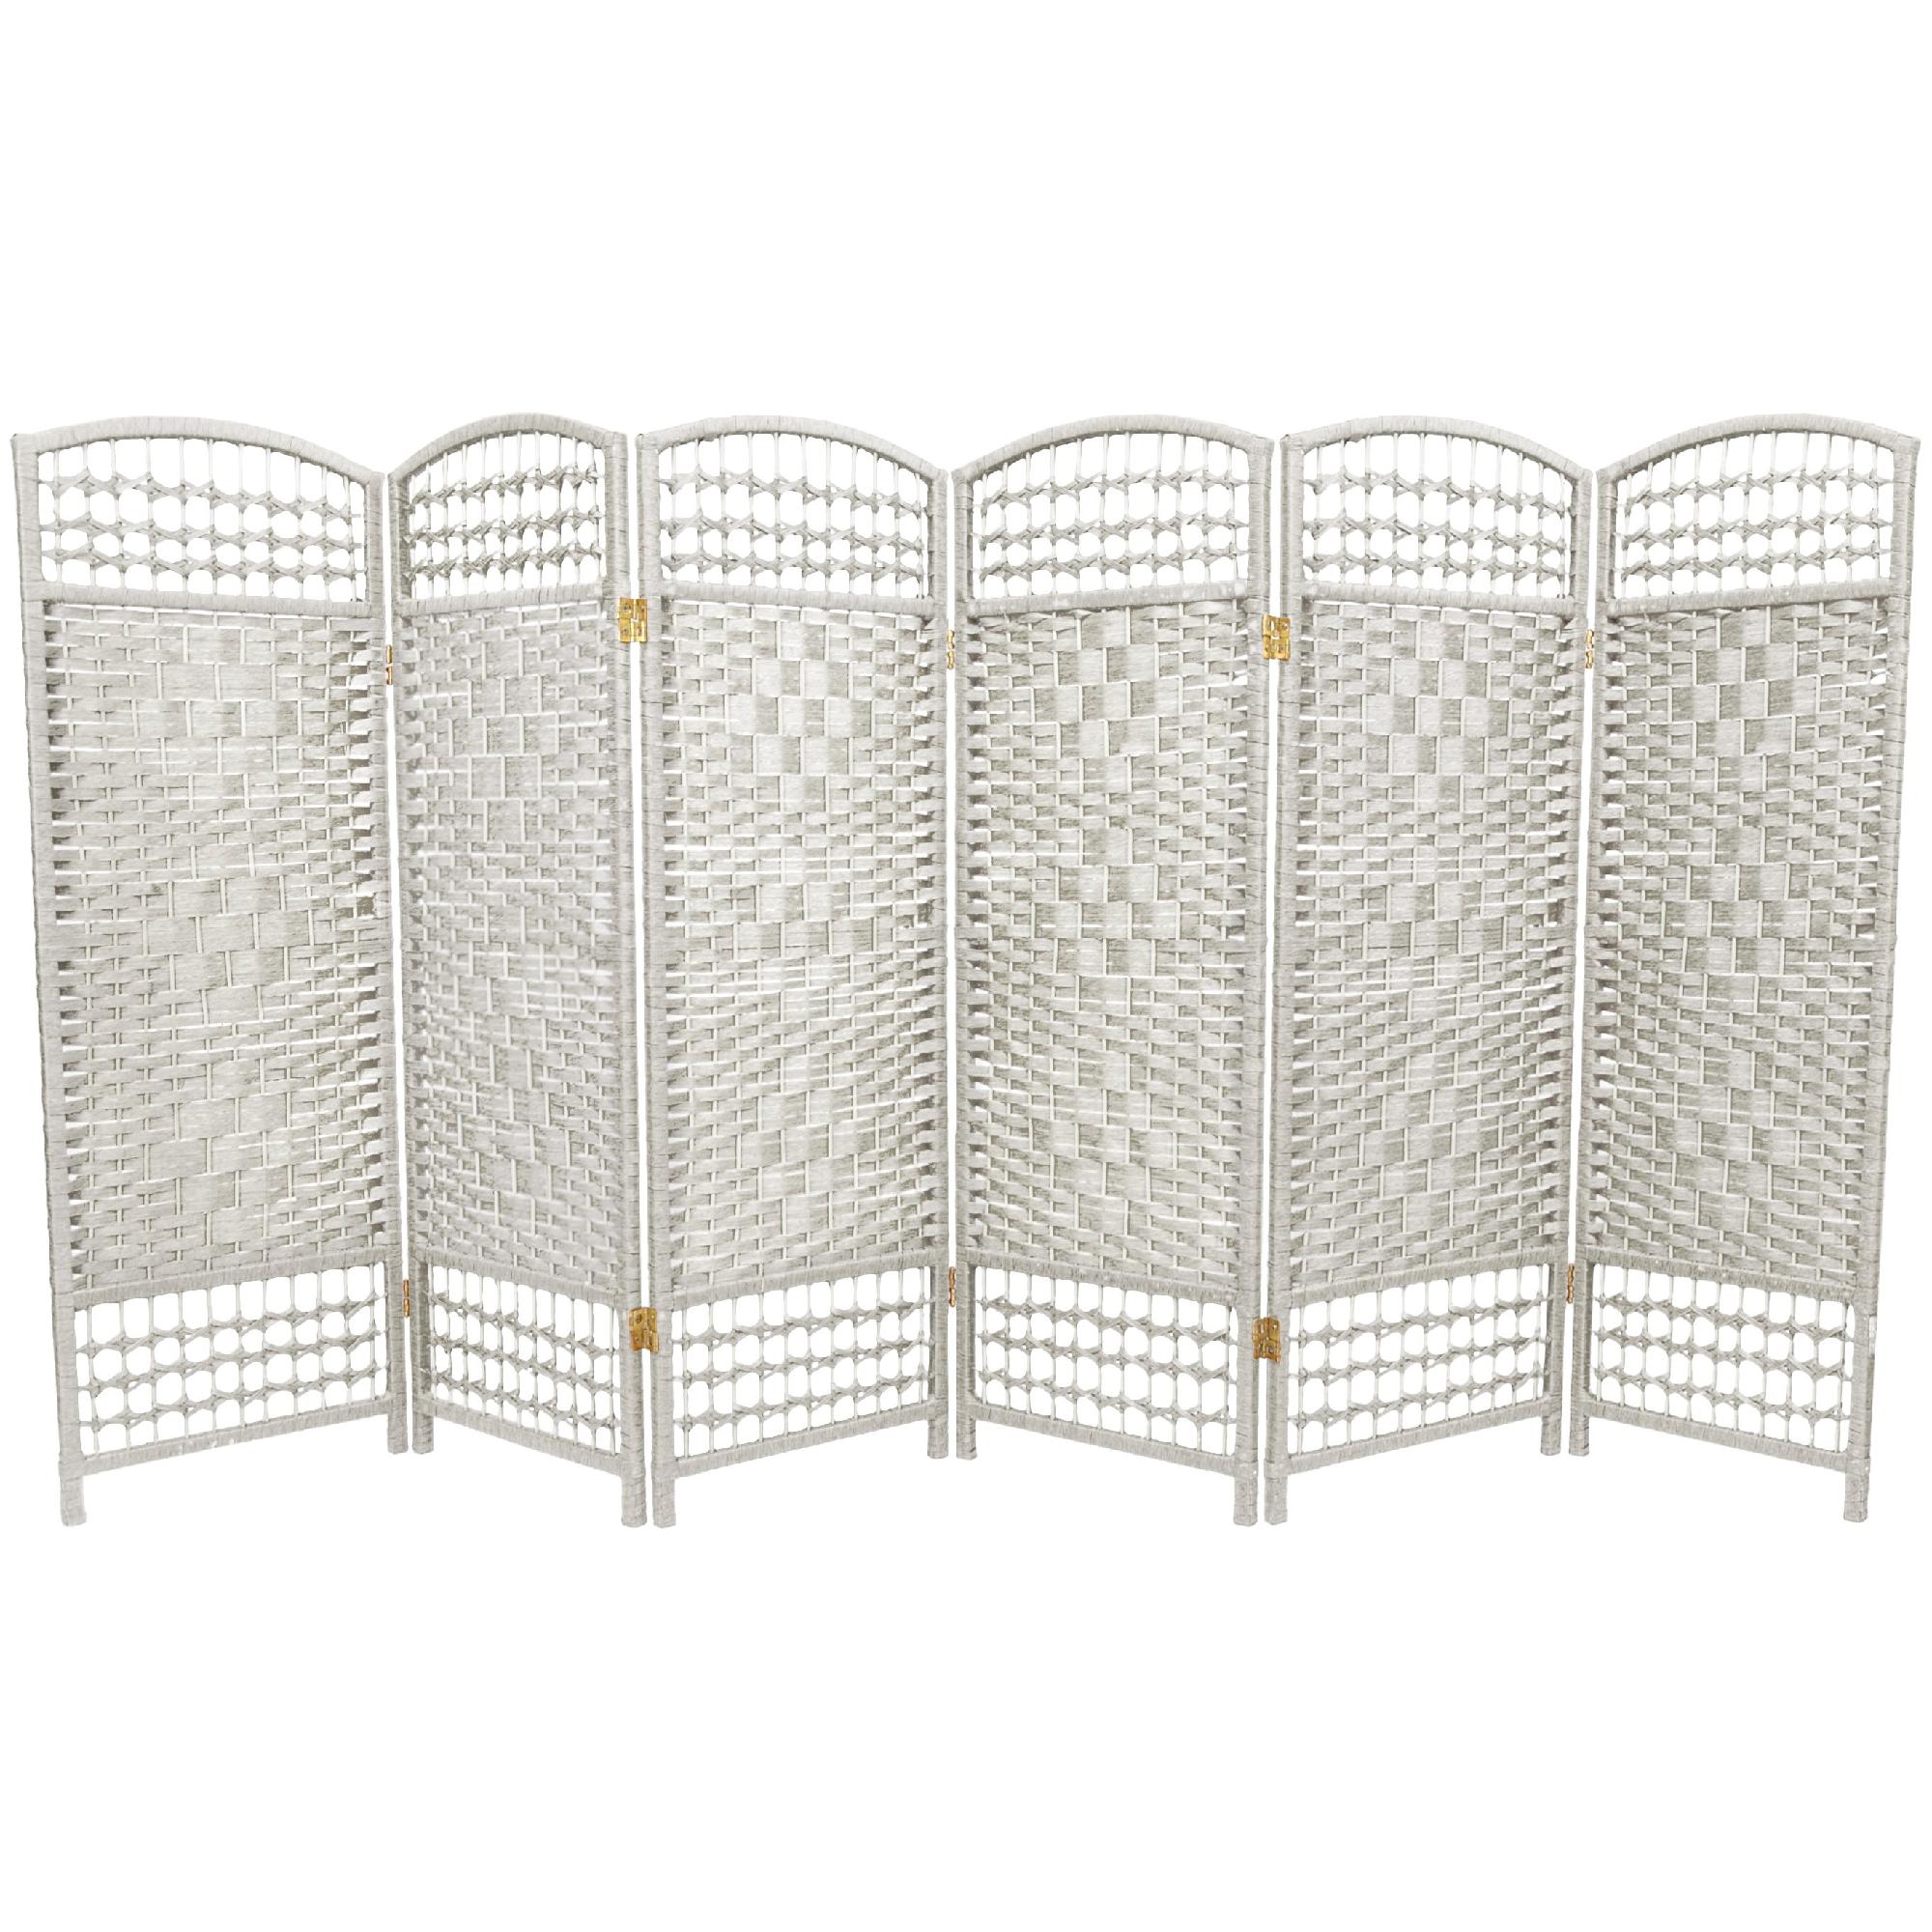 Oriental Furniture 4 ft. Tall Fiber Weave Room Divider - 6 Panel - White